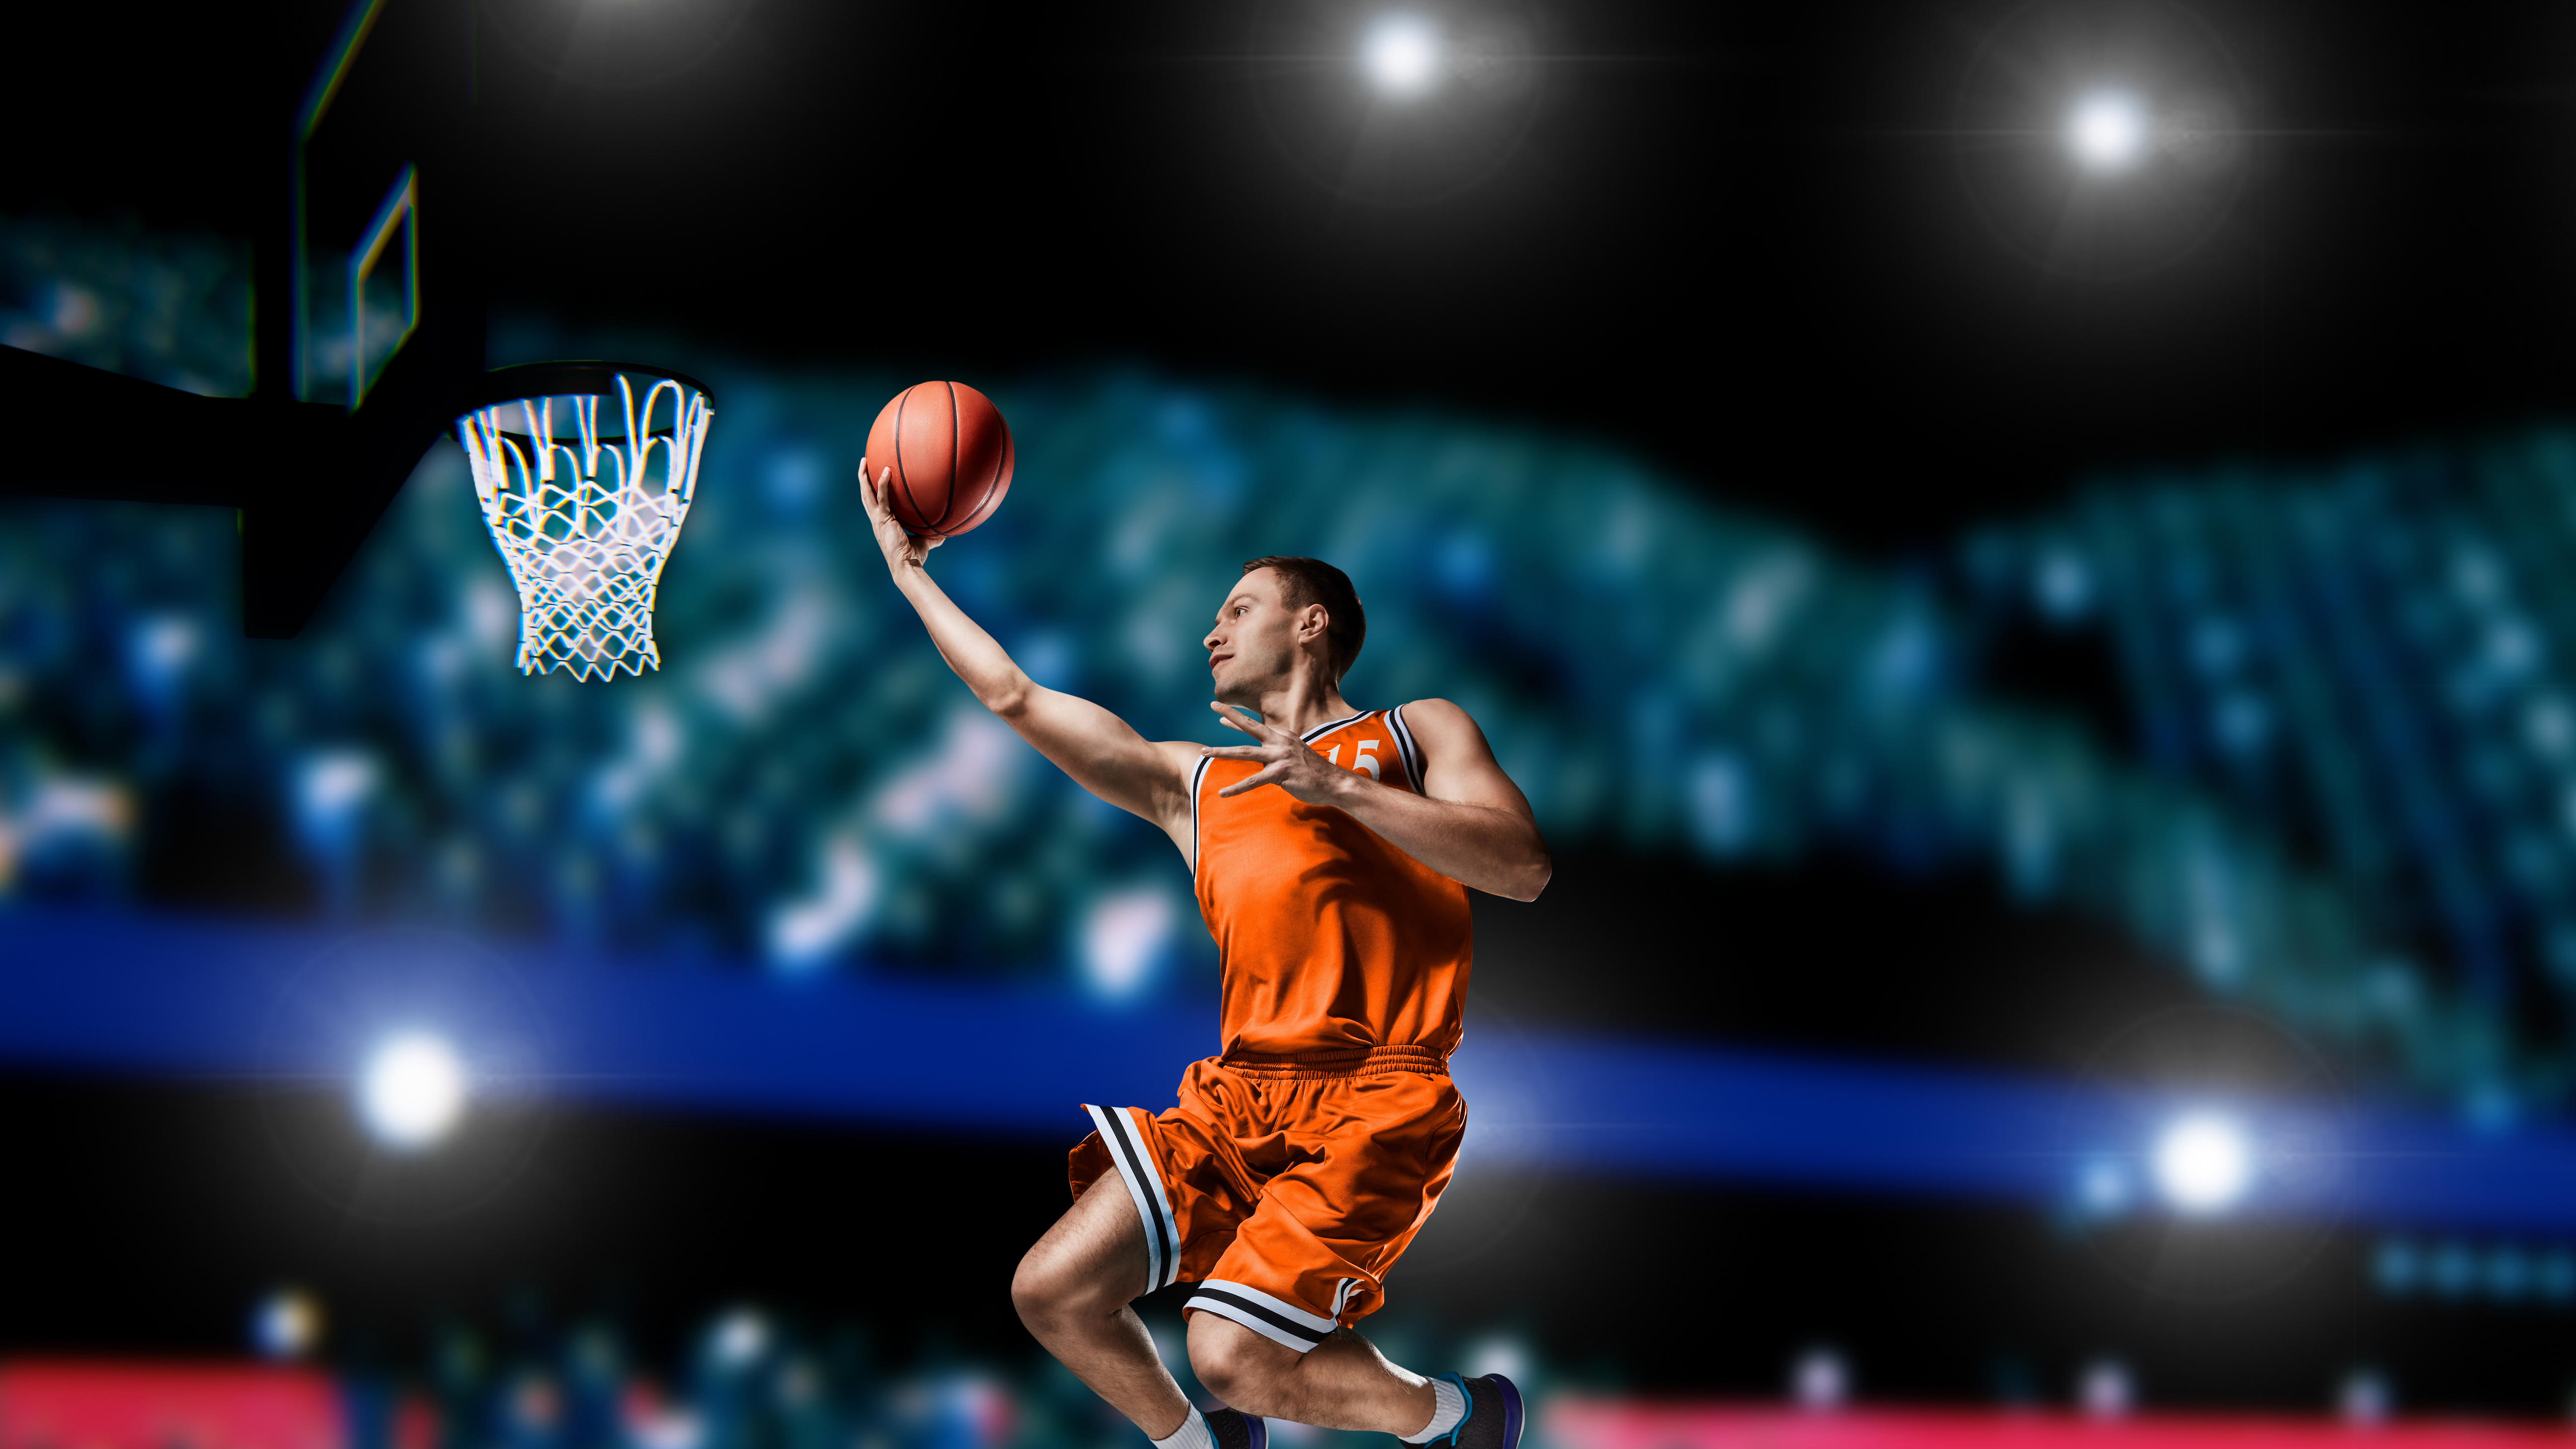 Sports is ru. Баскетбол. Баскетболист в прыжке. Баскетбол картинки. Баскетбол фон.